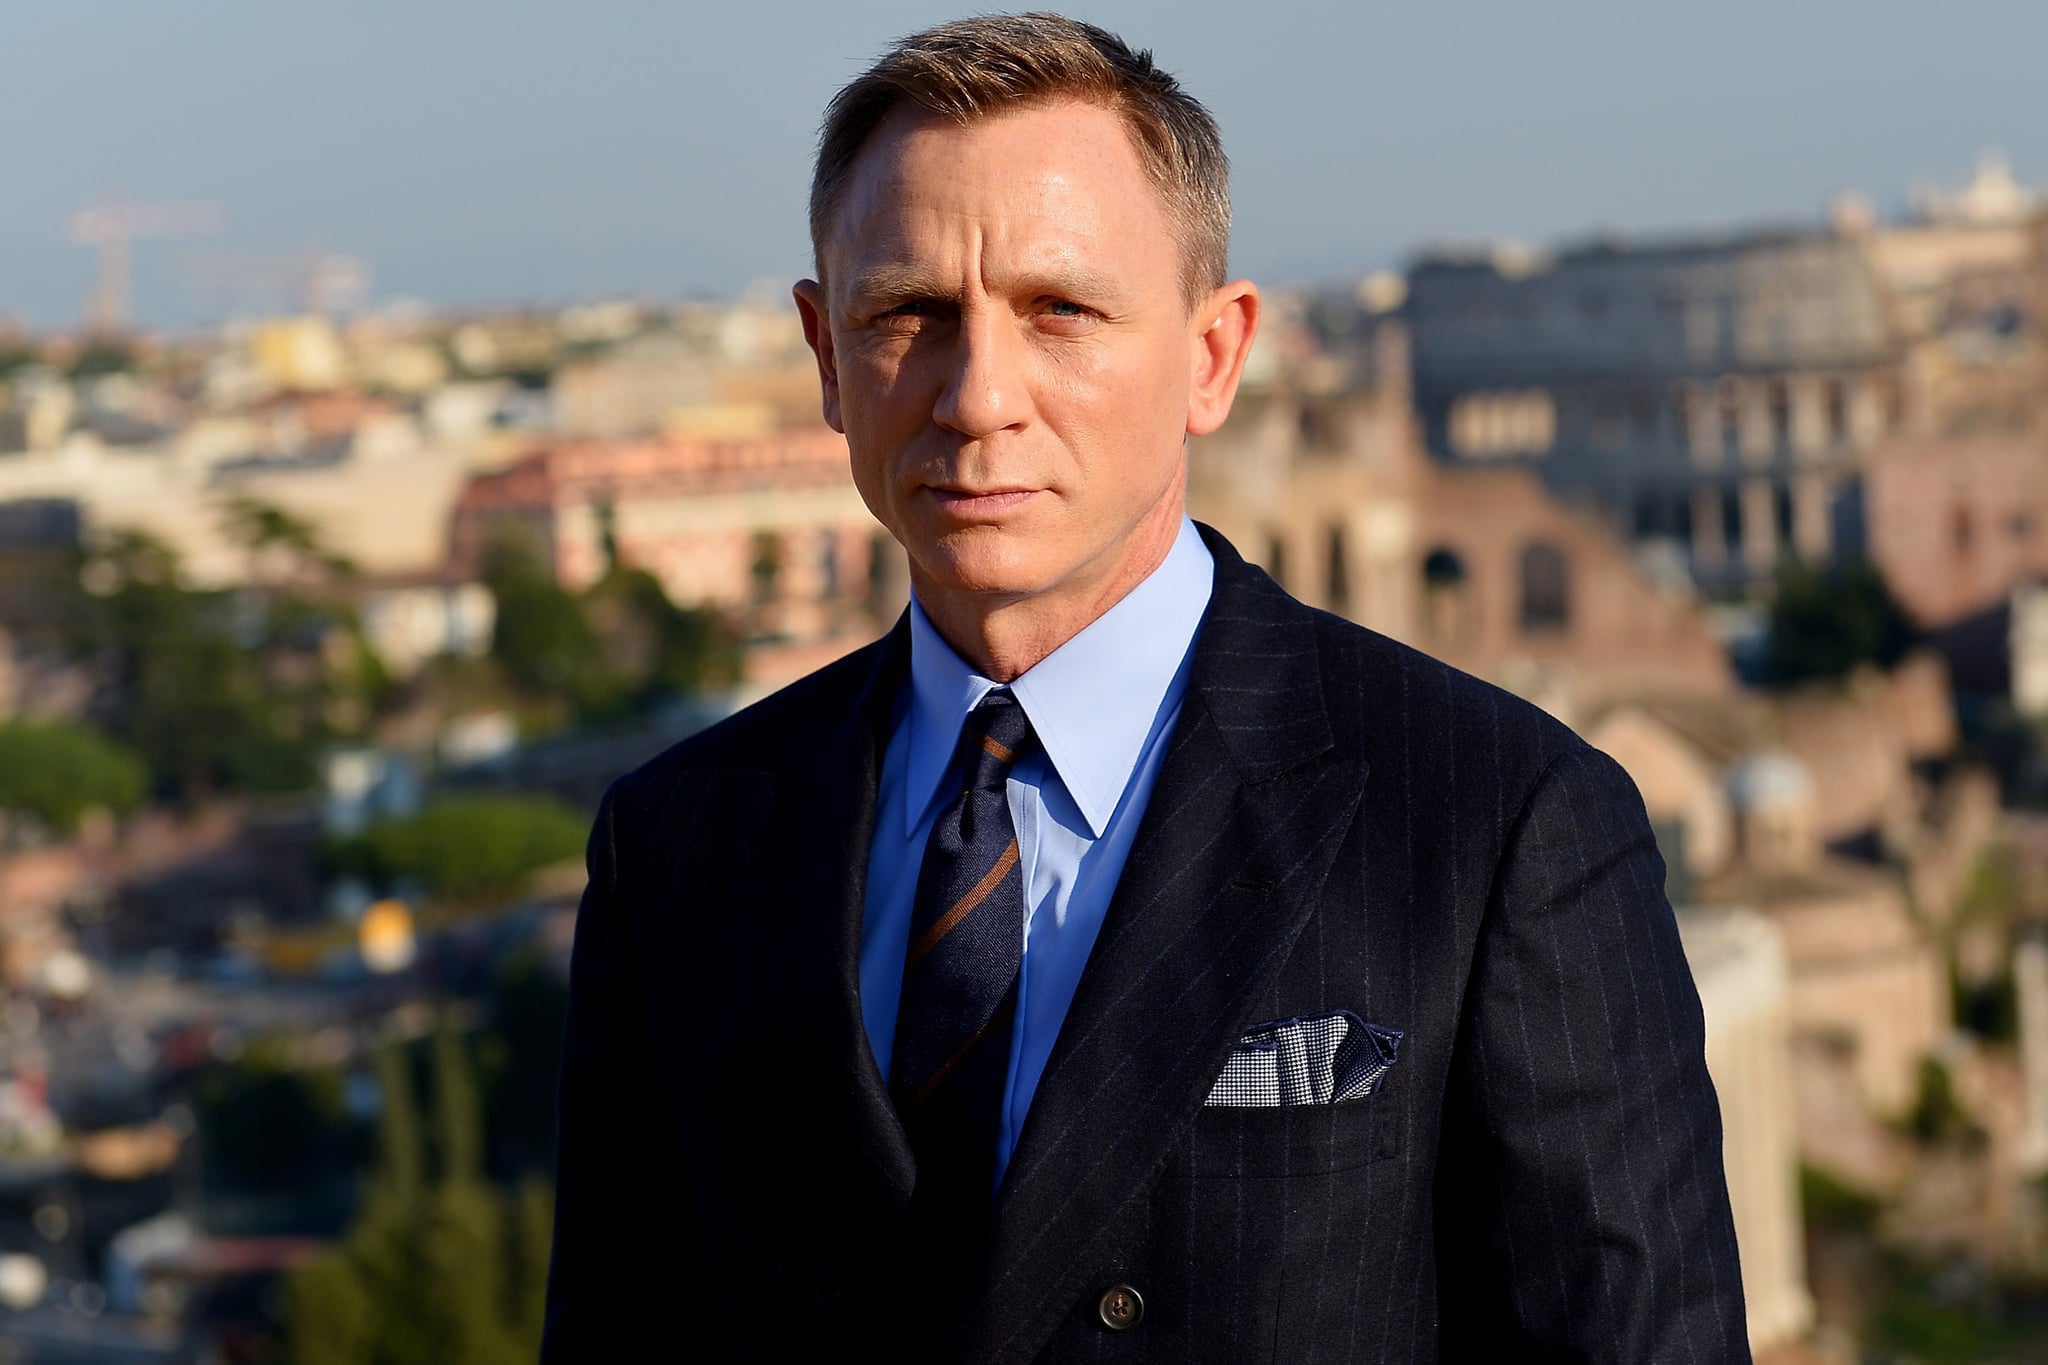 Daniel Craigs Quotes About Being Bond Again 2015 Popsugar Entertainment